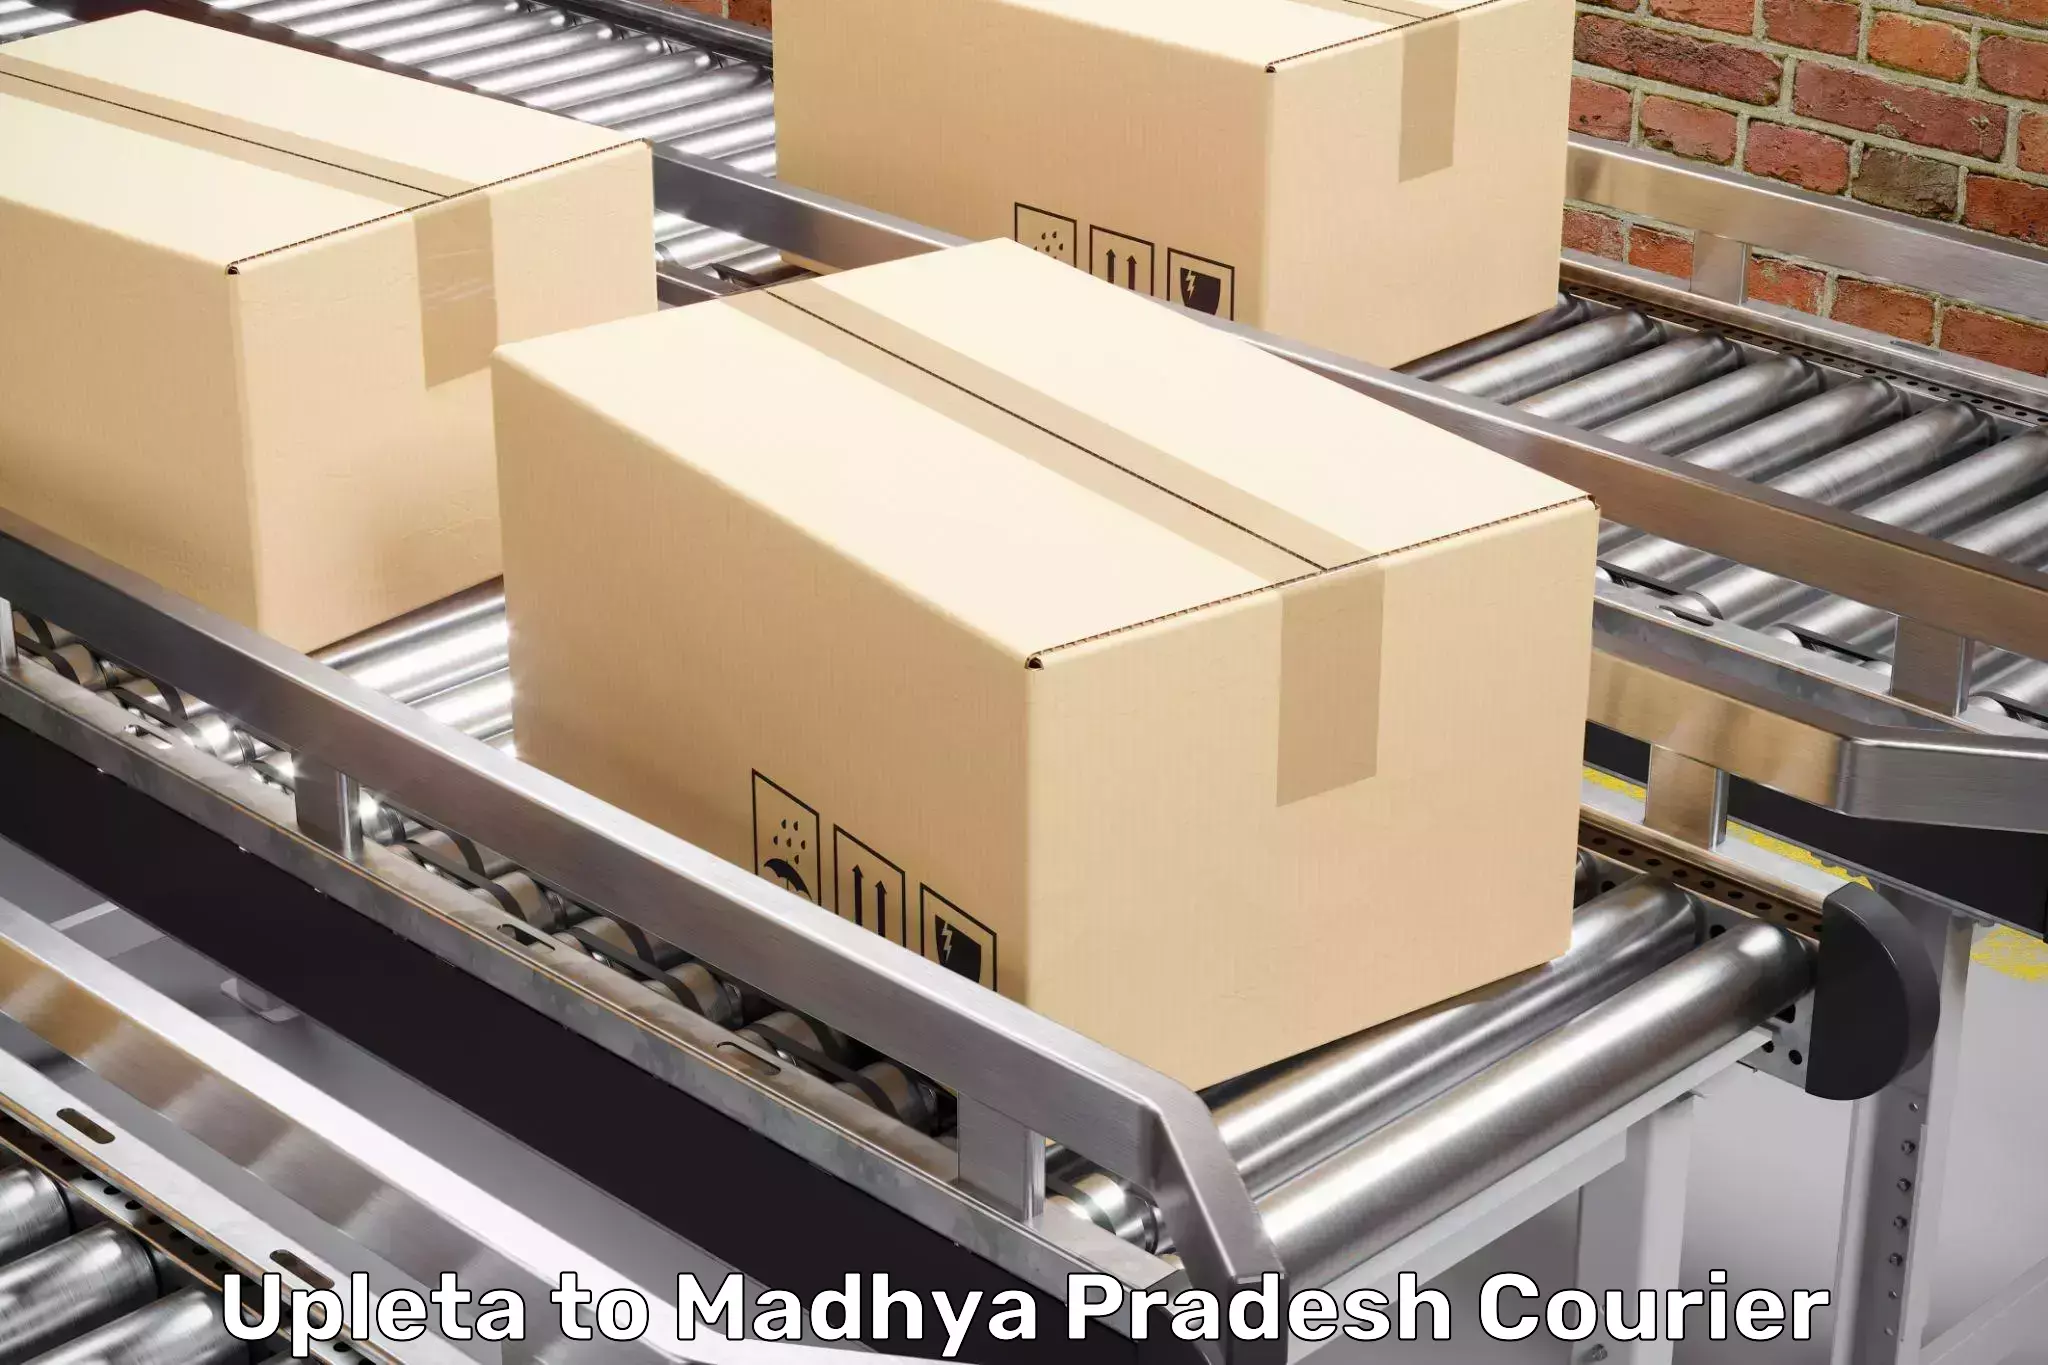 Professional moving company Upleta to Shajapur